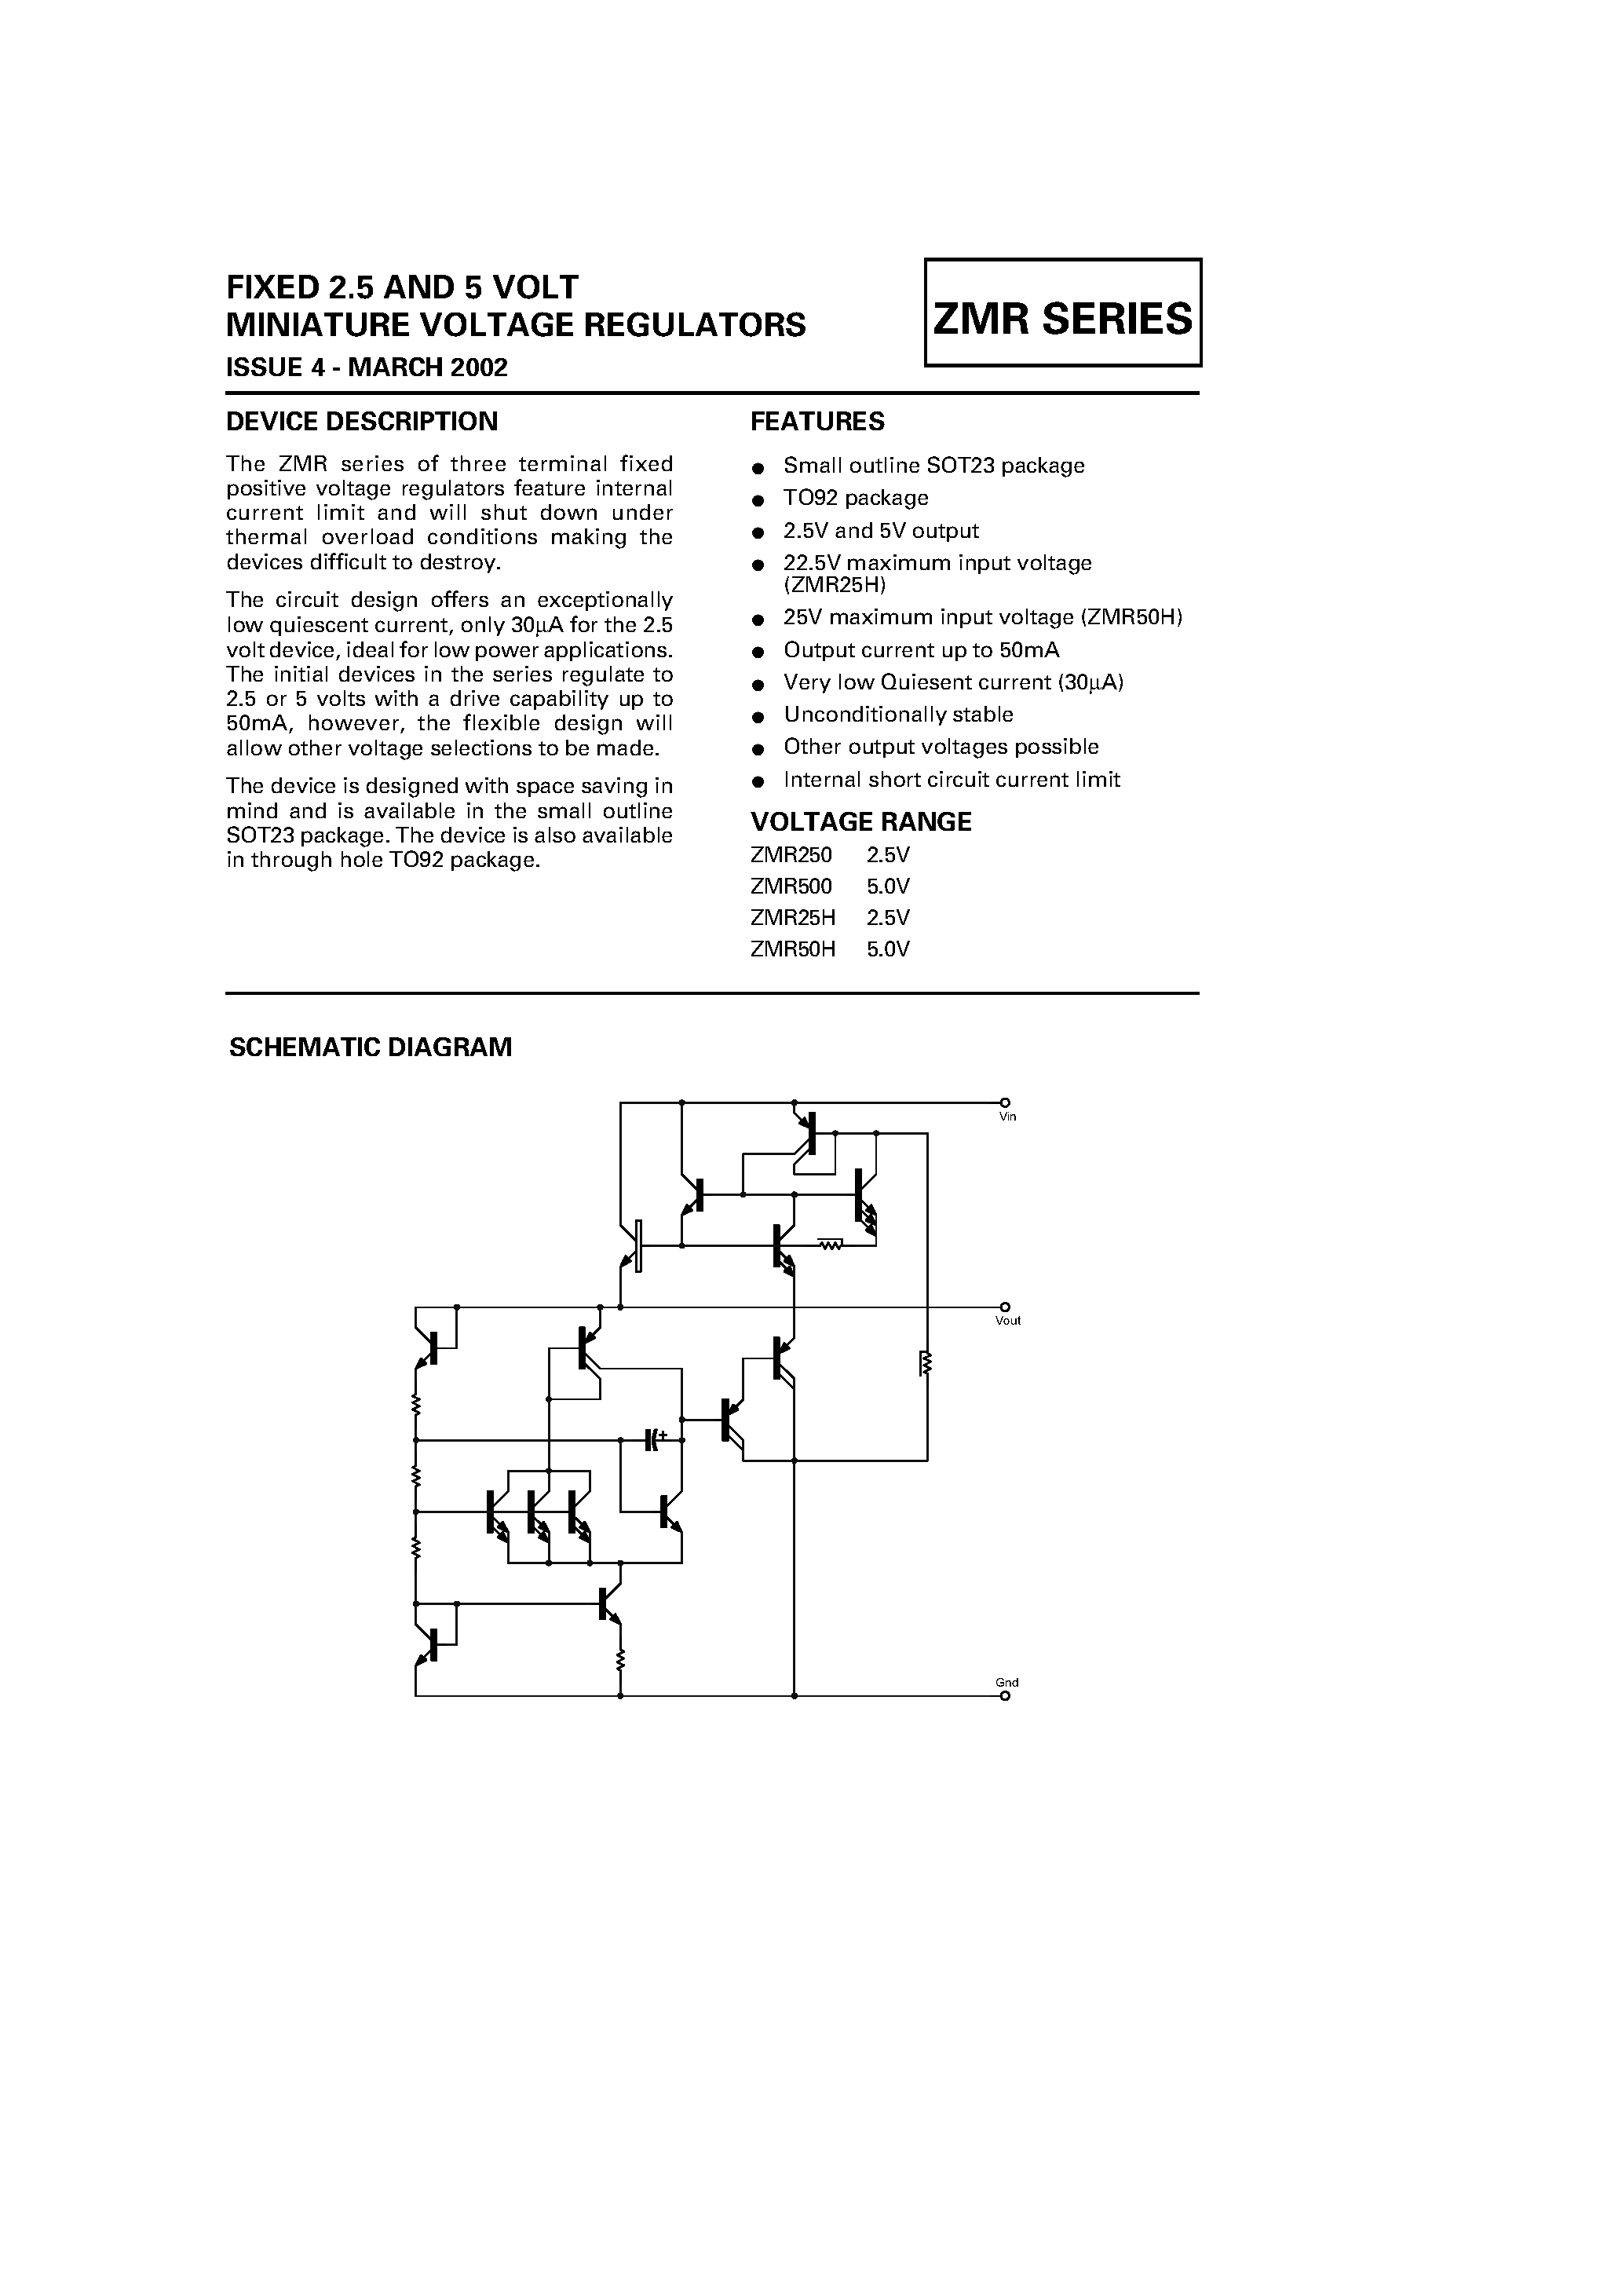 Datasheet ZMR250C - FIXED 2.5 AND 5 VOLT MINIATURE VOLTAGE REGULATORS page 1